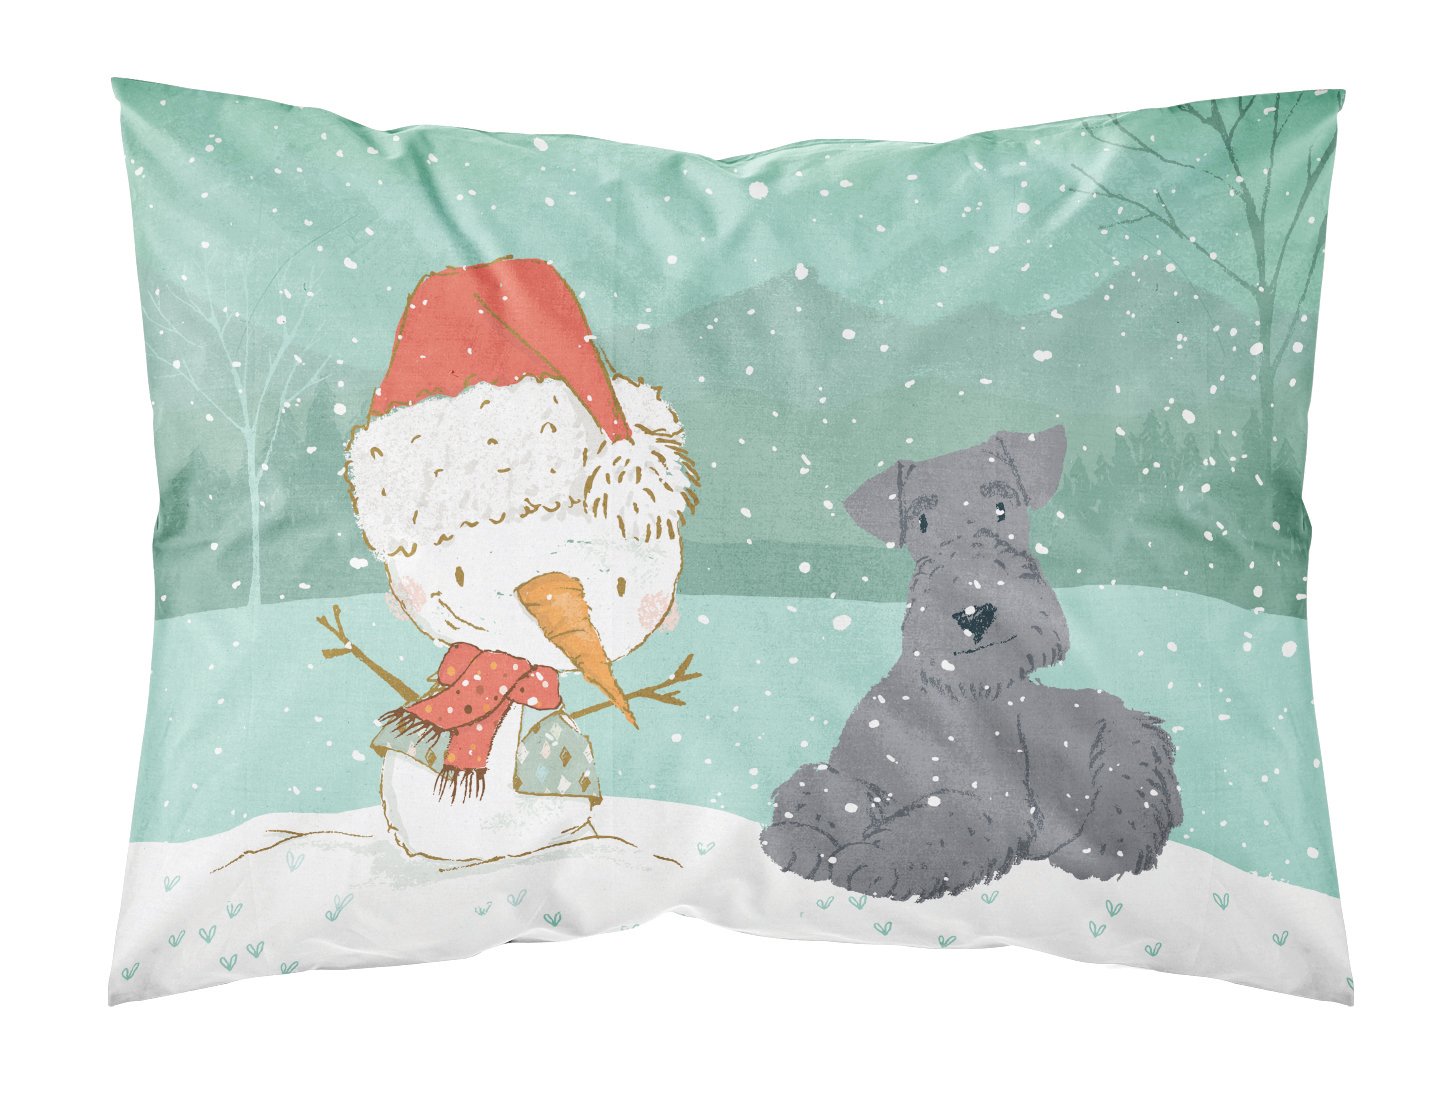 Lakeland Terrier Snowman Christmas Fabric Standard Pillowcase CK2077PILLOWCASE by Caroline's Treasures